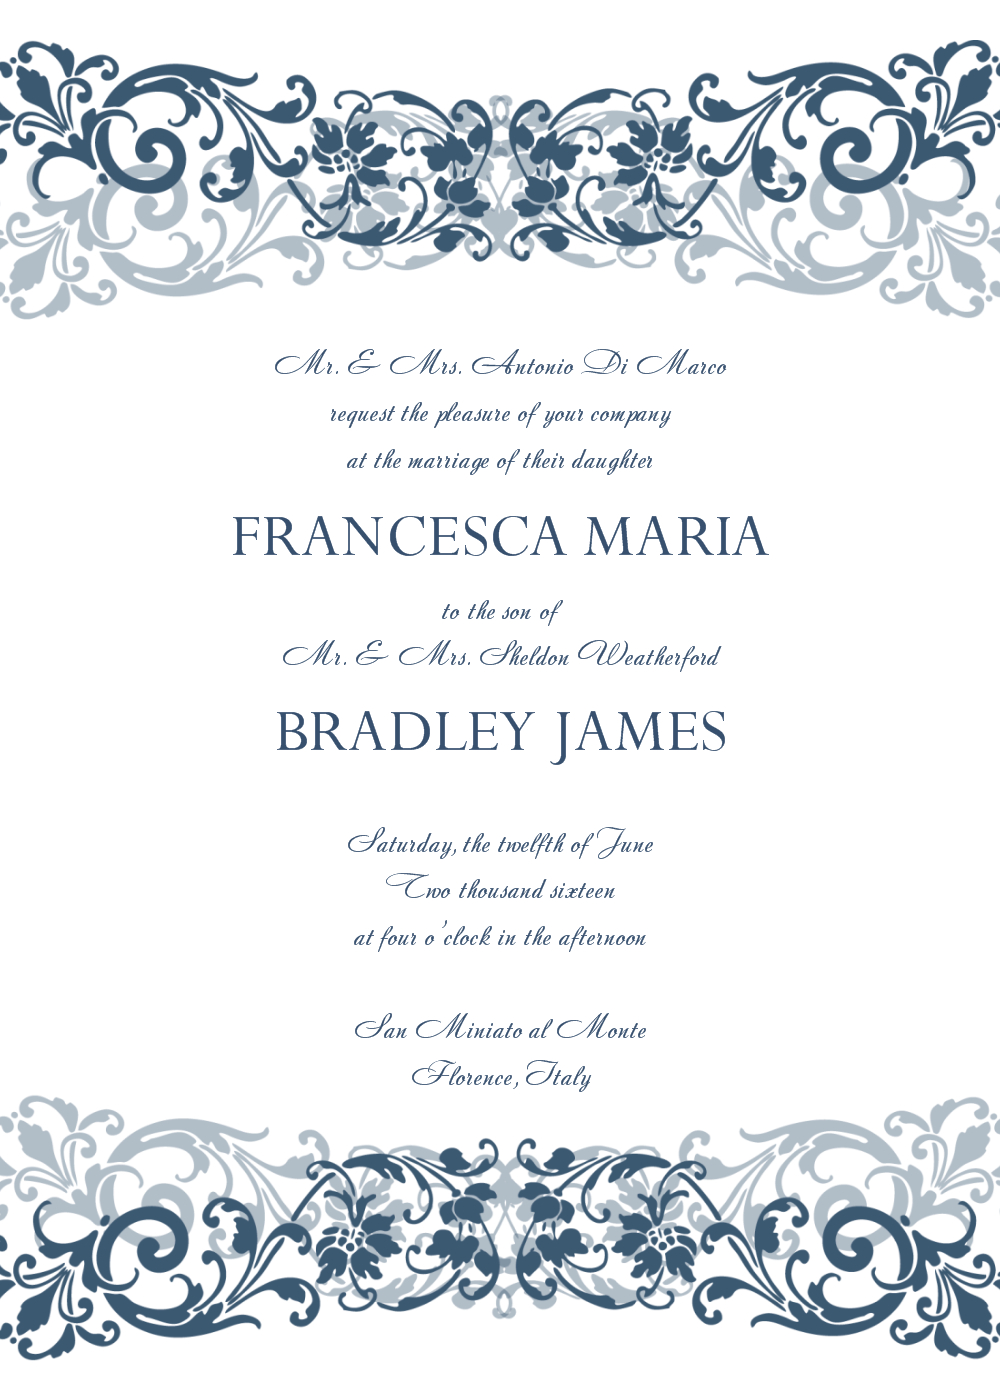 Wedding Invitation Templates Free 30 Free Wedding Invitations Templates 21st Bridal World